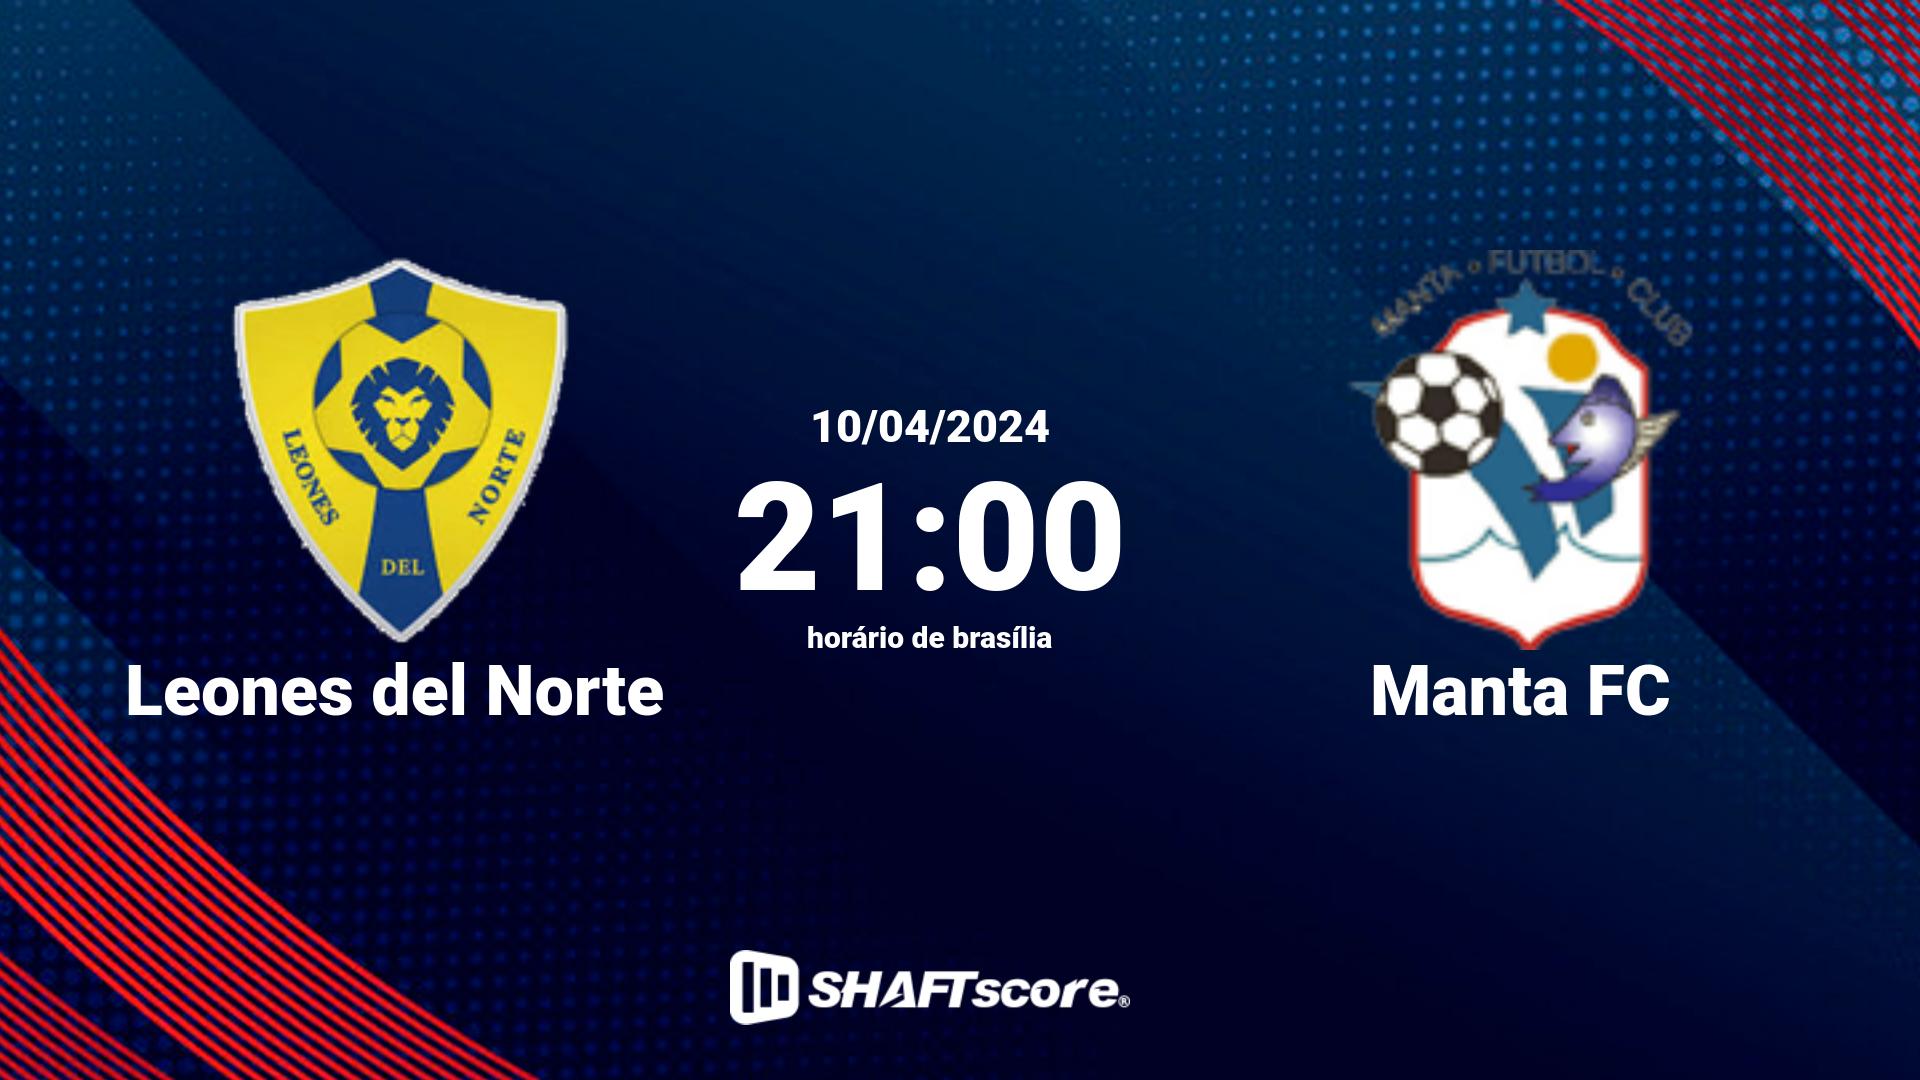 Estatísticas do jogo Leones del Norte vs Manta FC 10.04 21:00